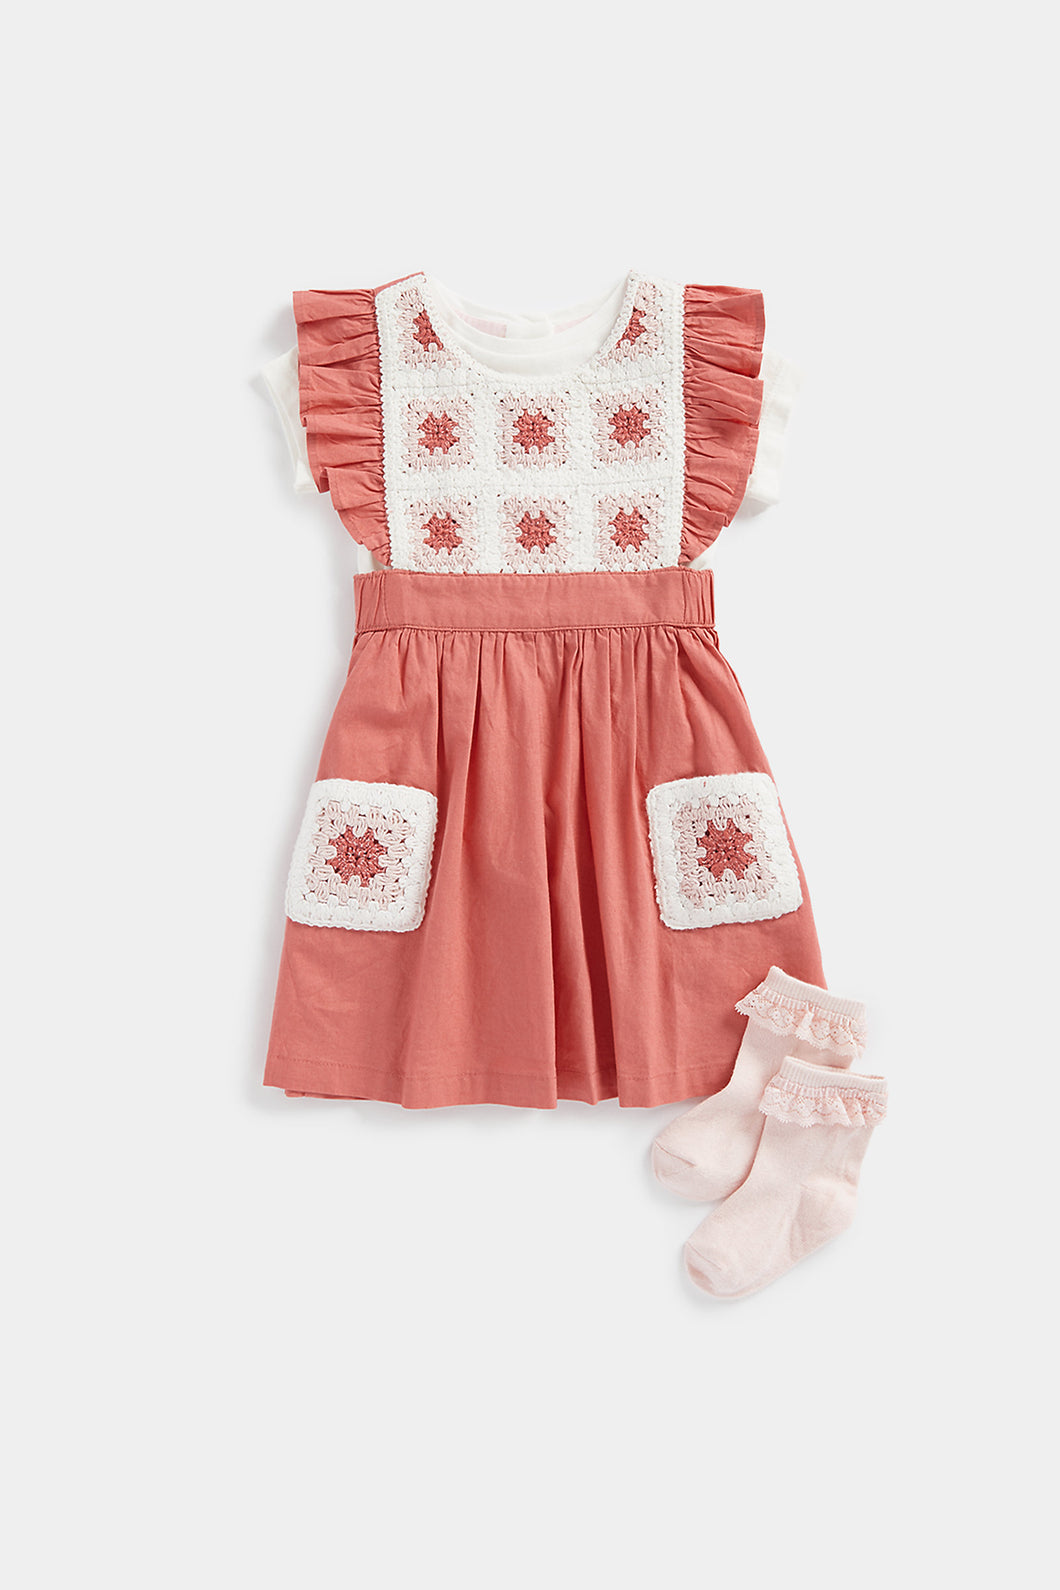 Mothercare Pink Pinny Dress, T-Shirt and Socks Set